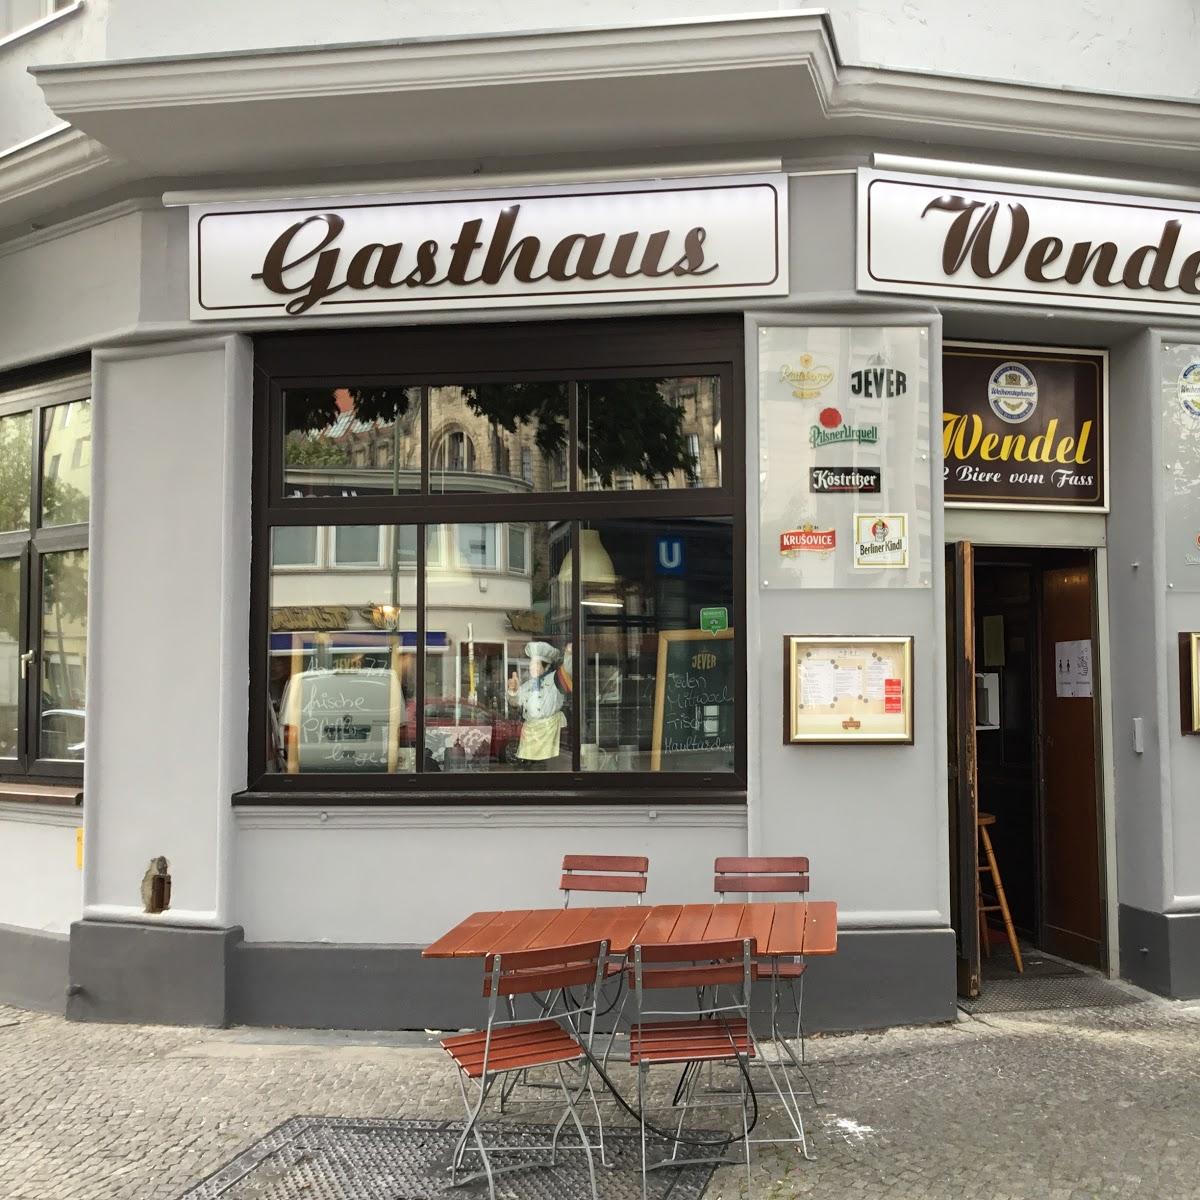 Restaurant "Restaurant Wendel" in Berlin